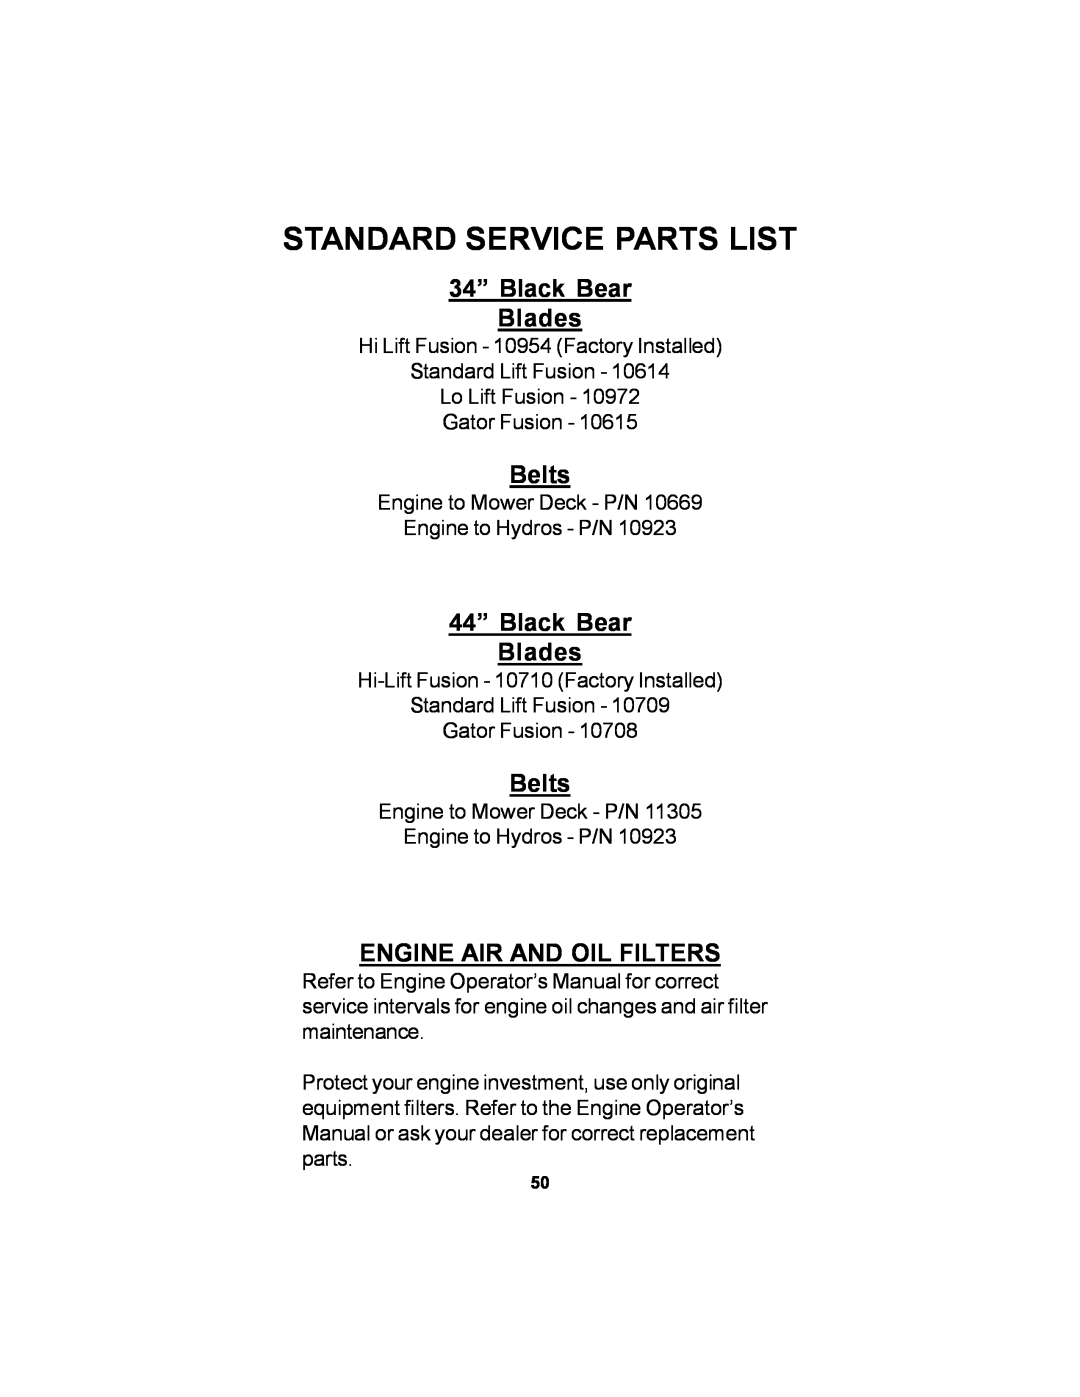 Dixon 11249-106 manual Standard Service Parts List, 34” Black Bear Blades, Belts, 44” Black Bear Blades 